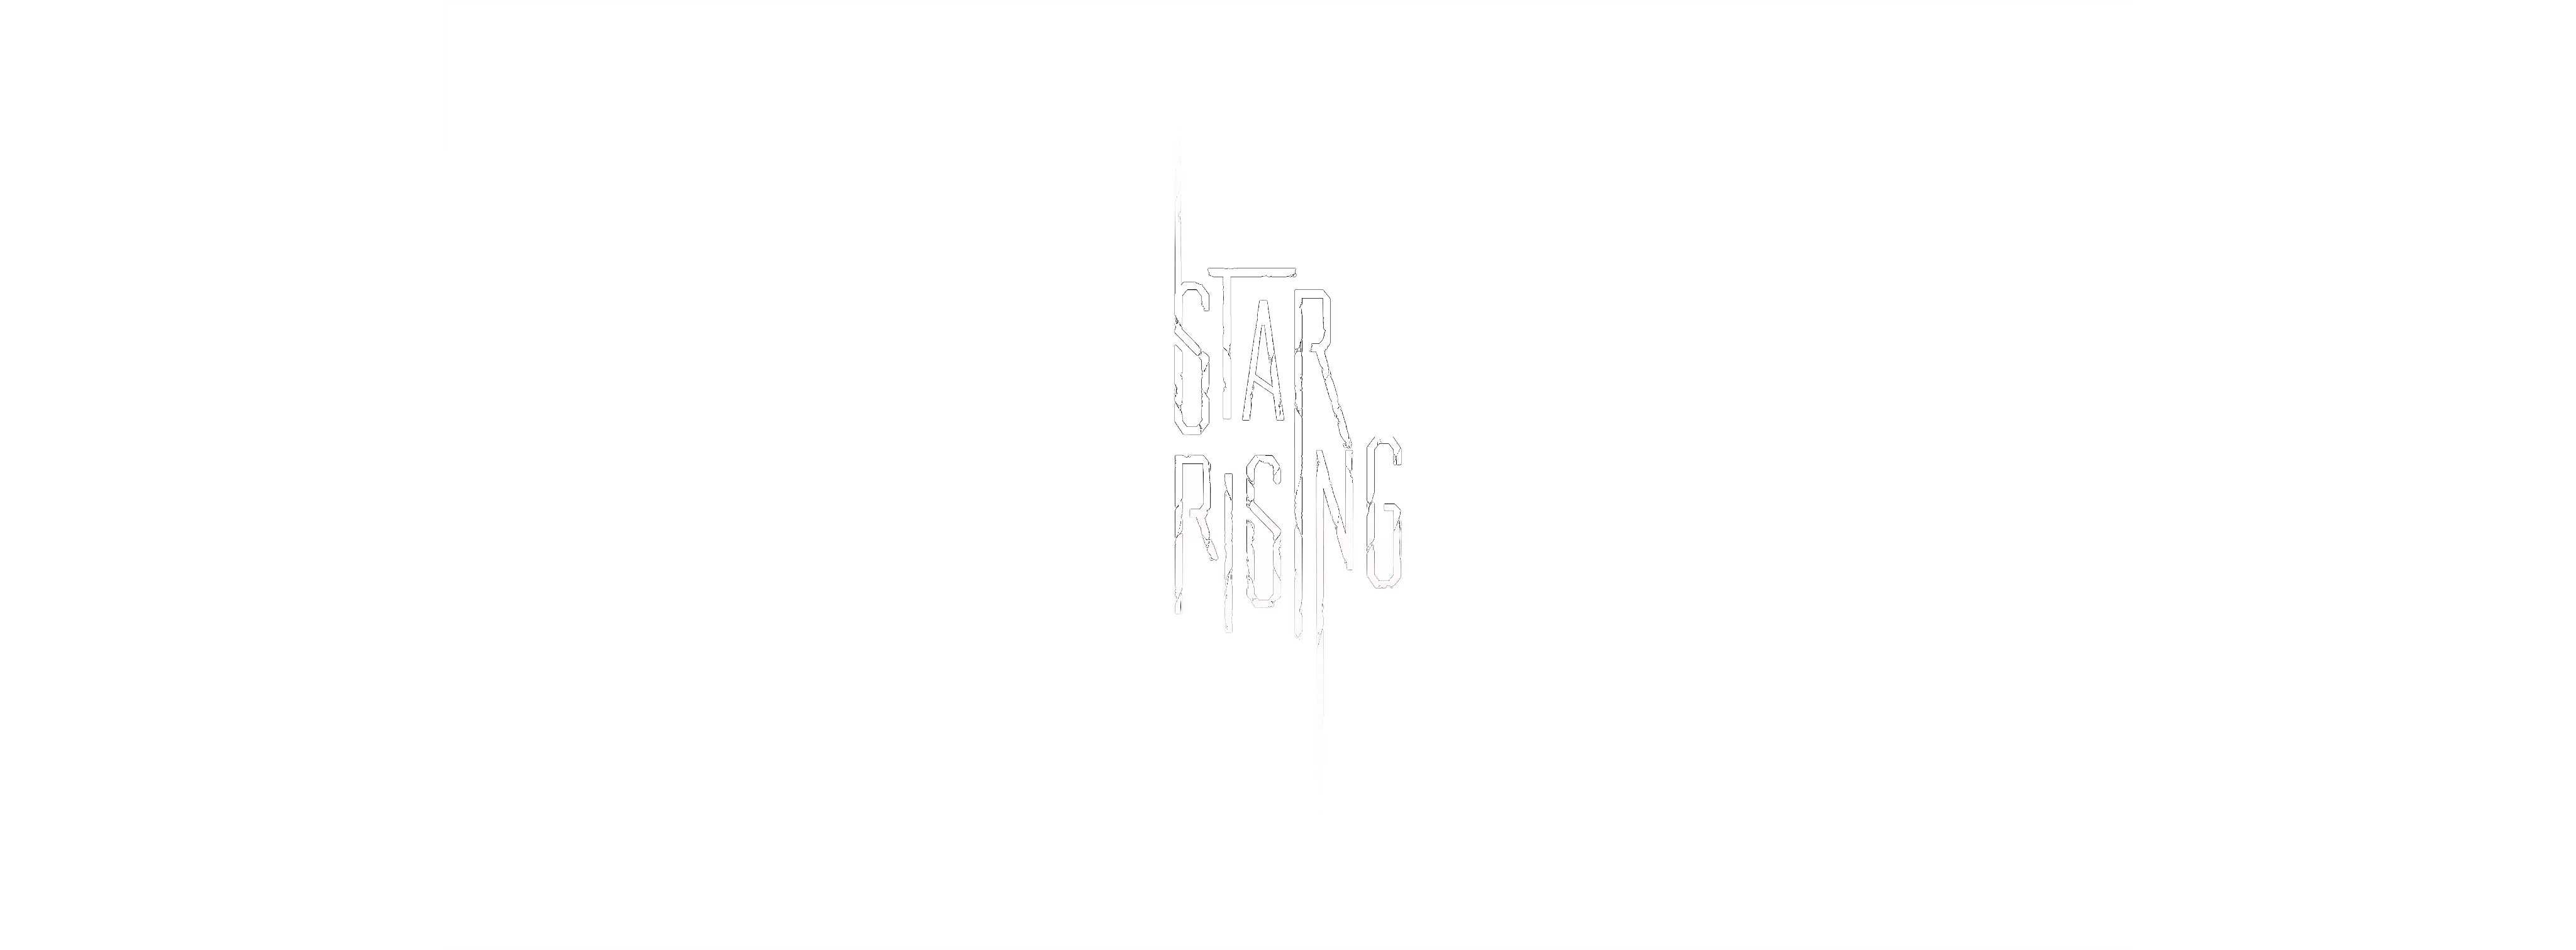 Star Rising - Star Rising